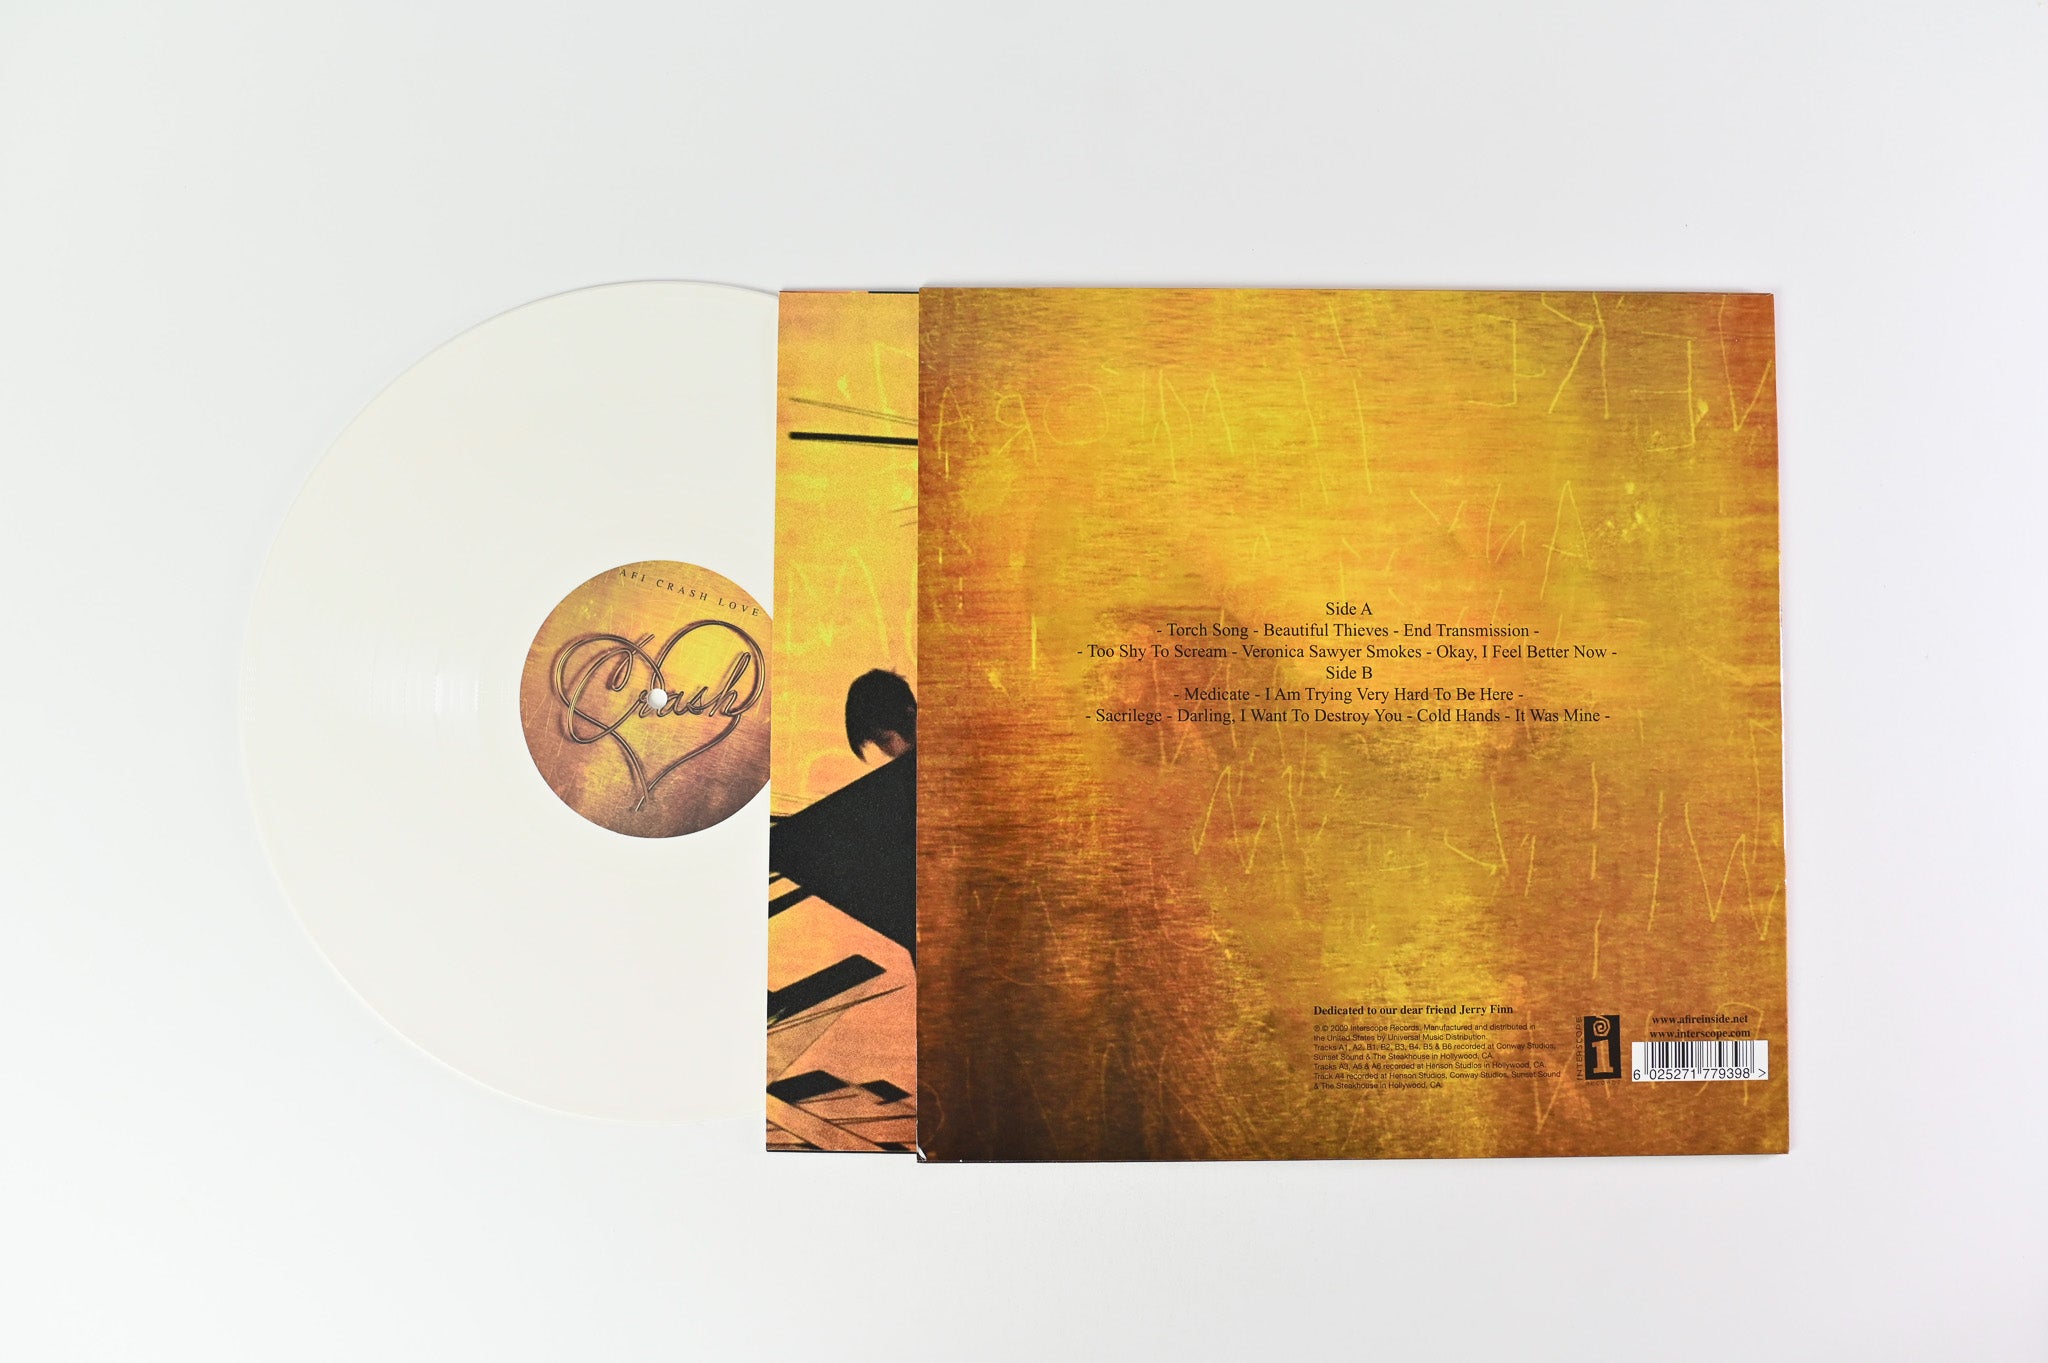 AFI - Crash Love on Interscope White Vinyl Unofficial Release